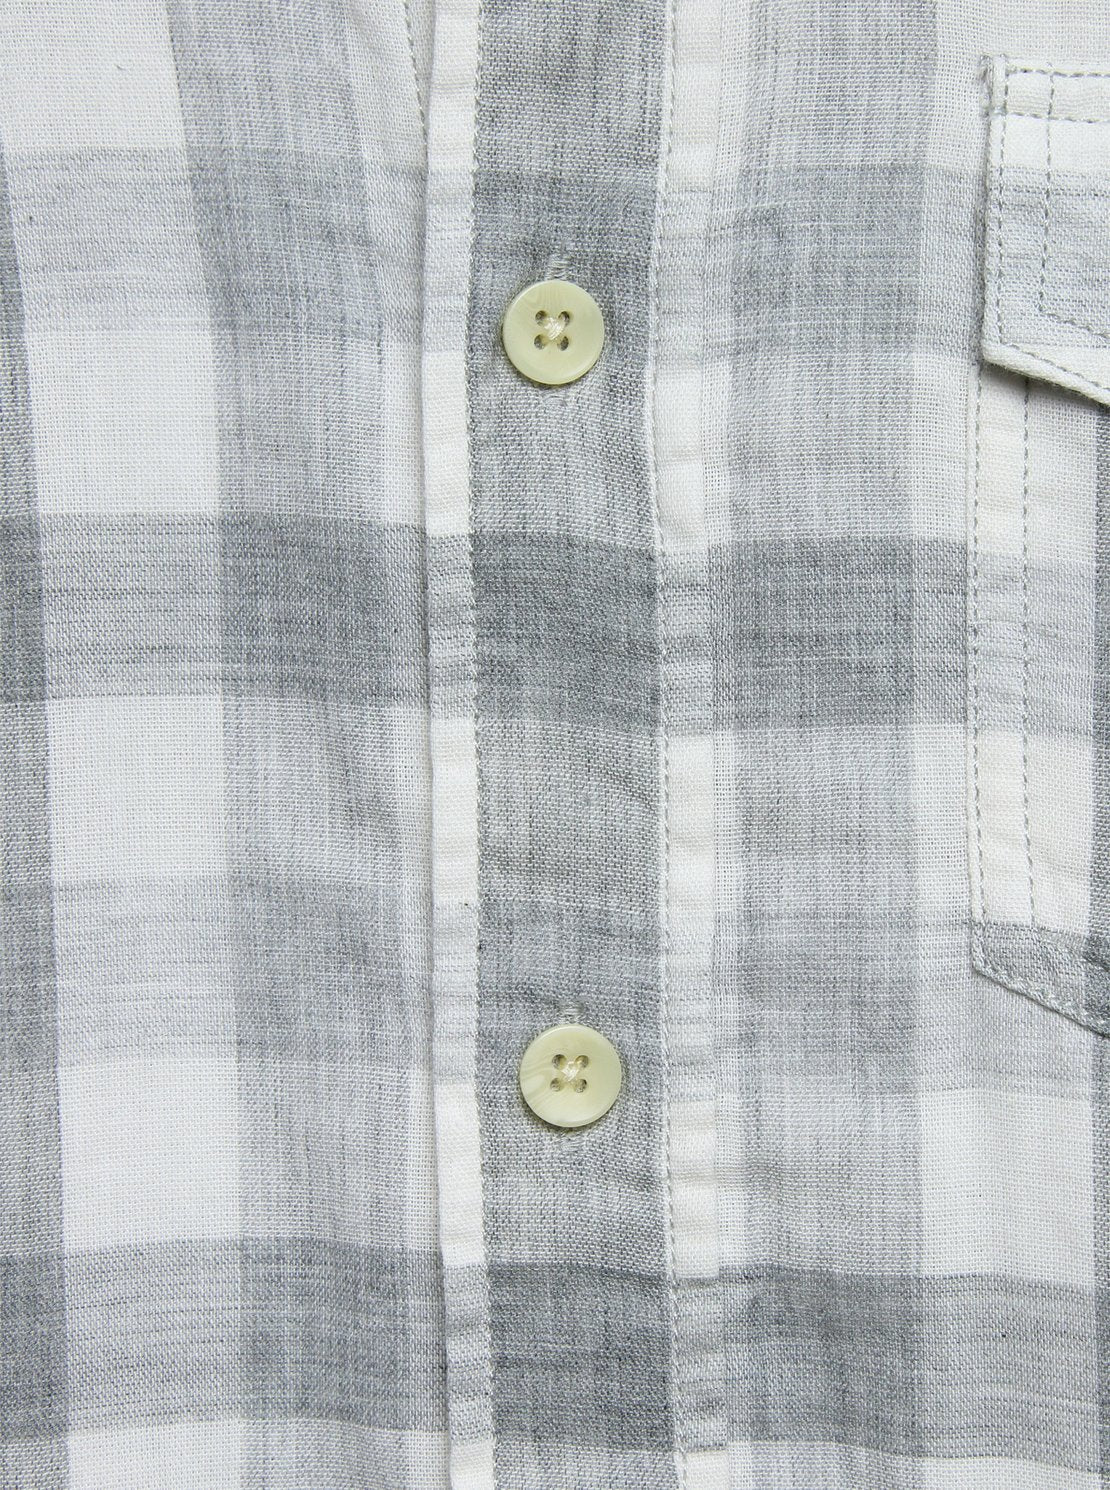 Durham Gingham Double Cloth Shirt - Heather Grey